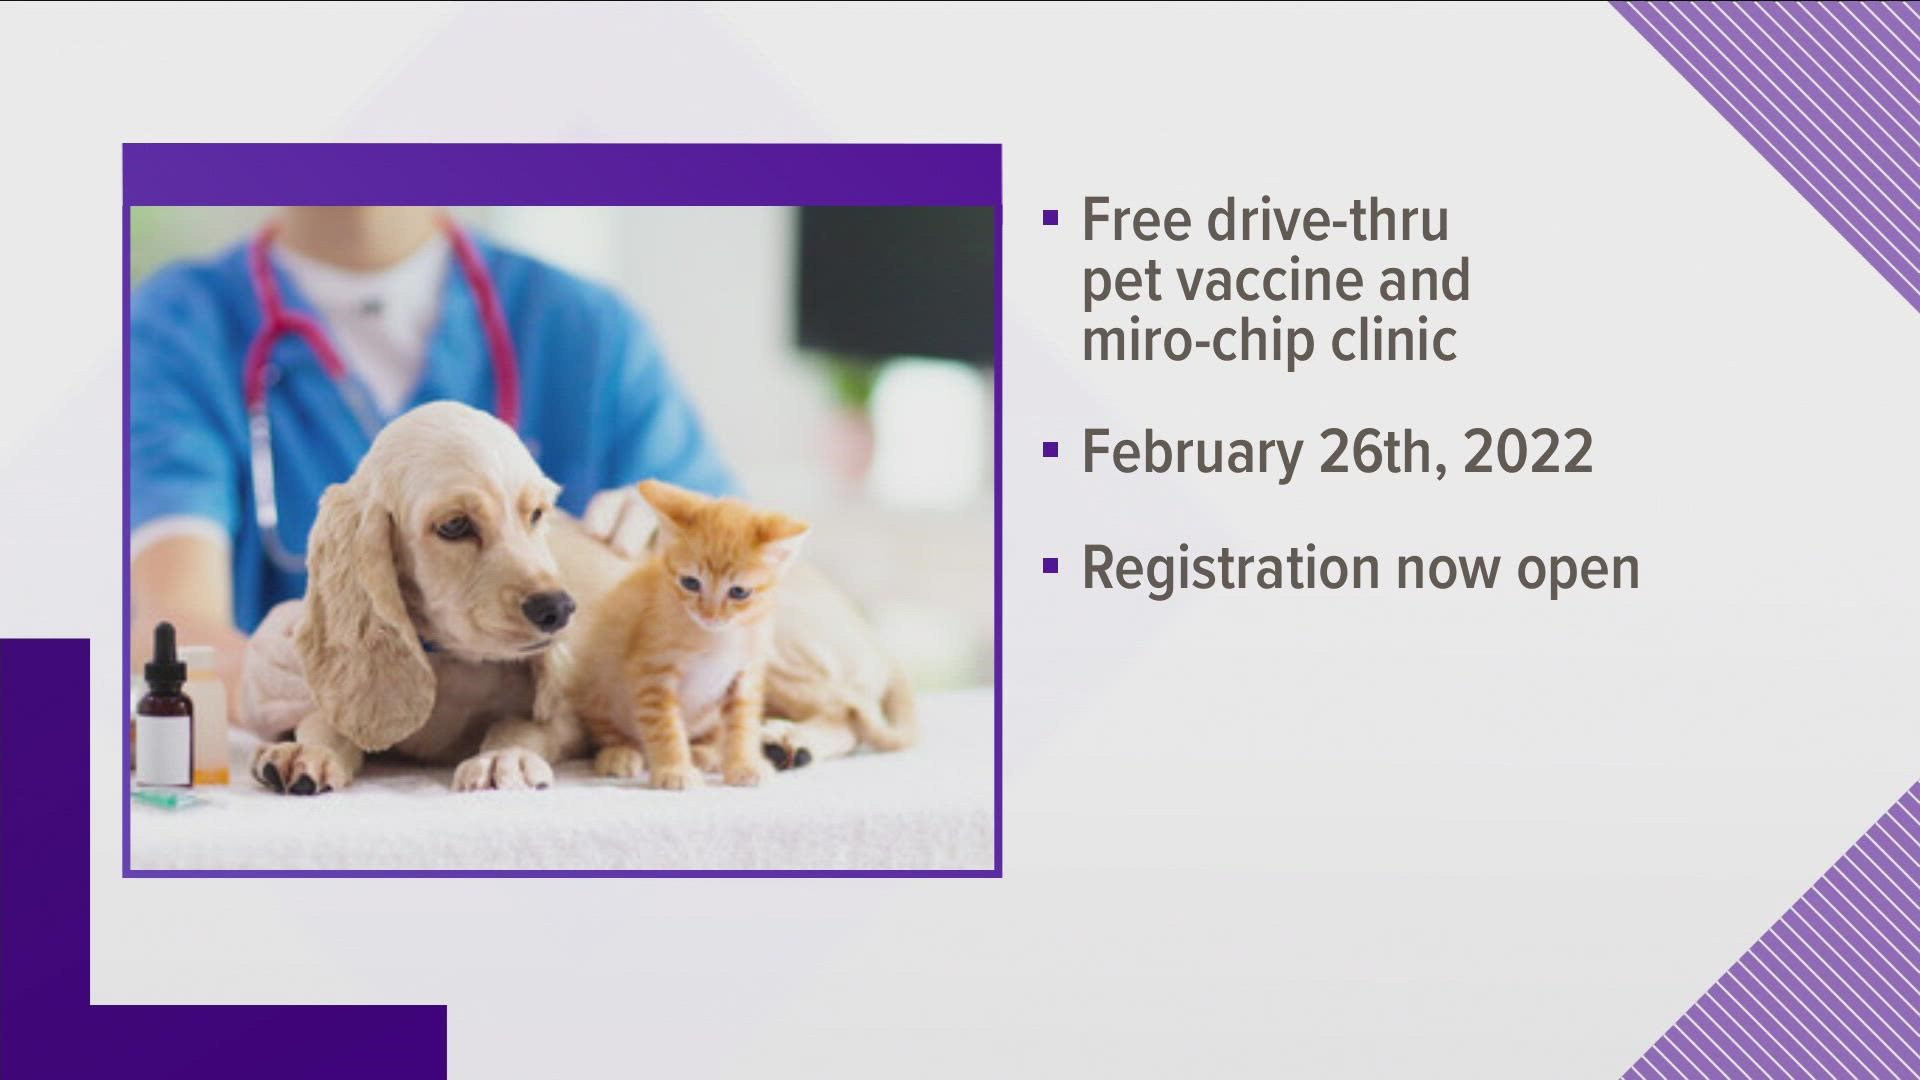 Free drive-thru pet vaccine and microchip clinic on Feb. 26 